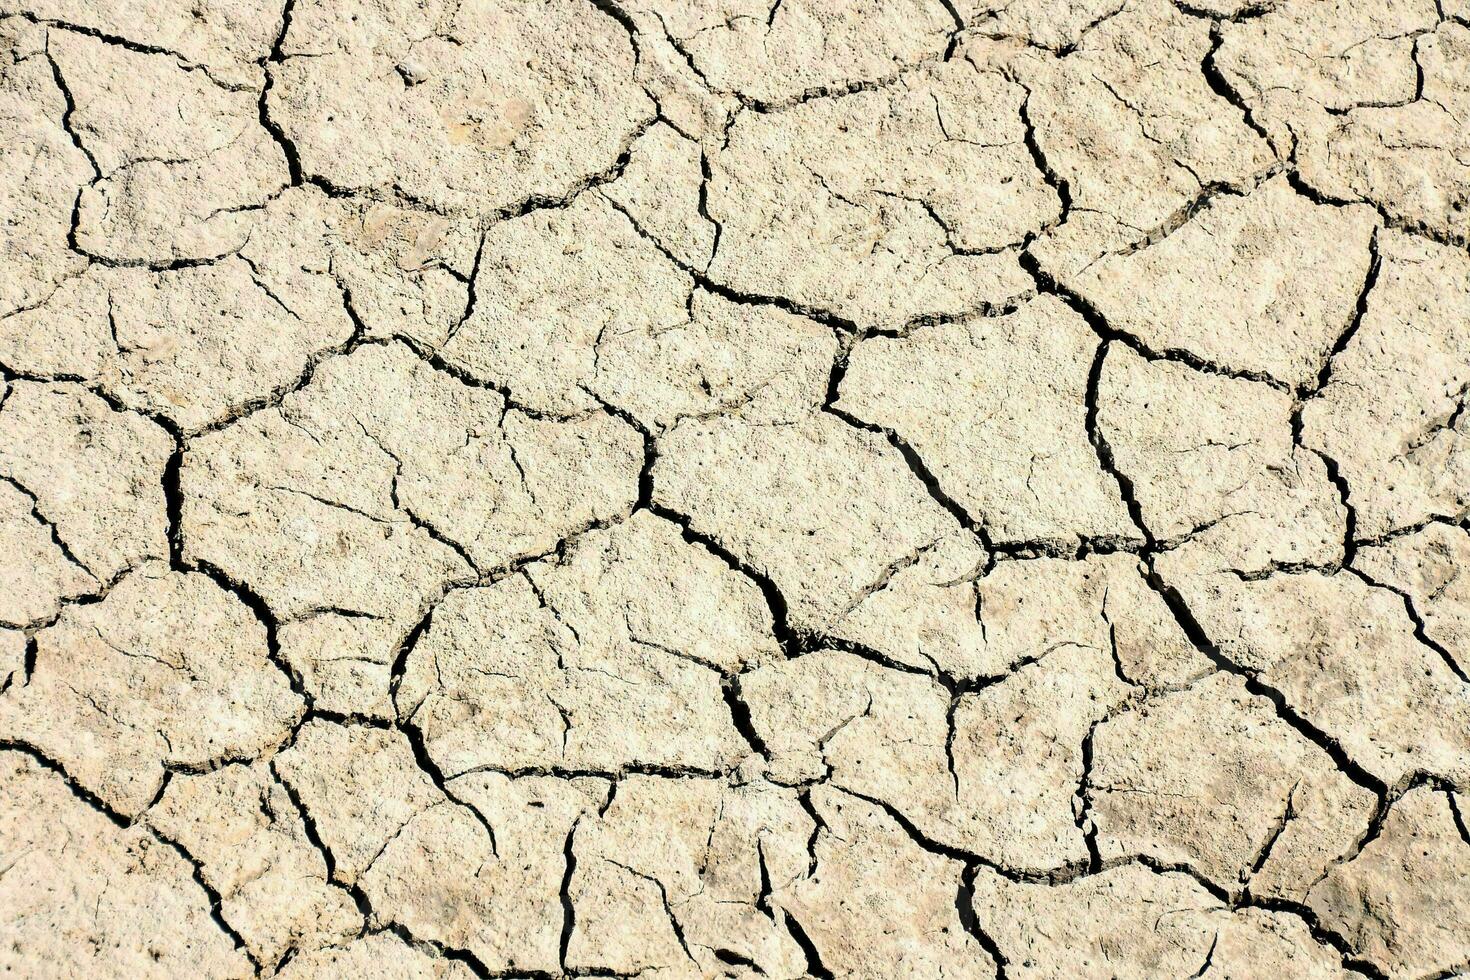 Cracked soil texture photo